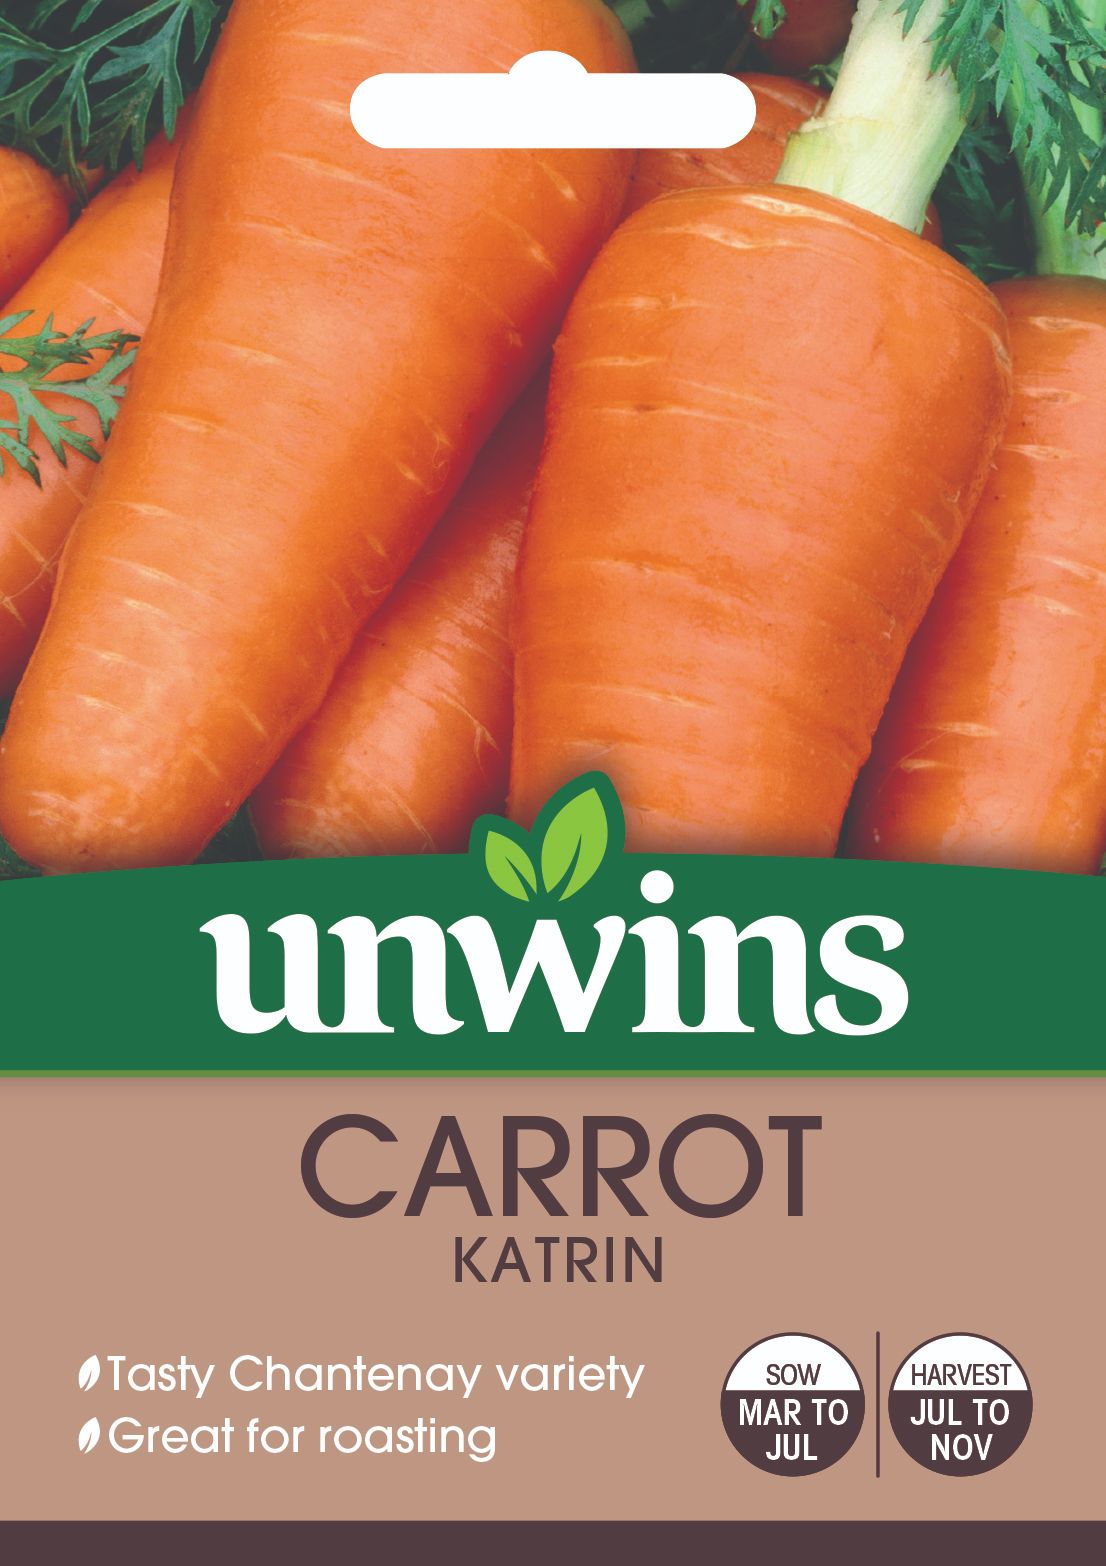 Carrot Katrin